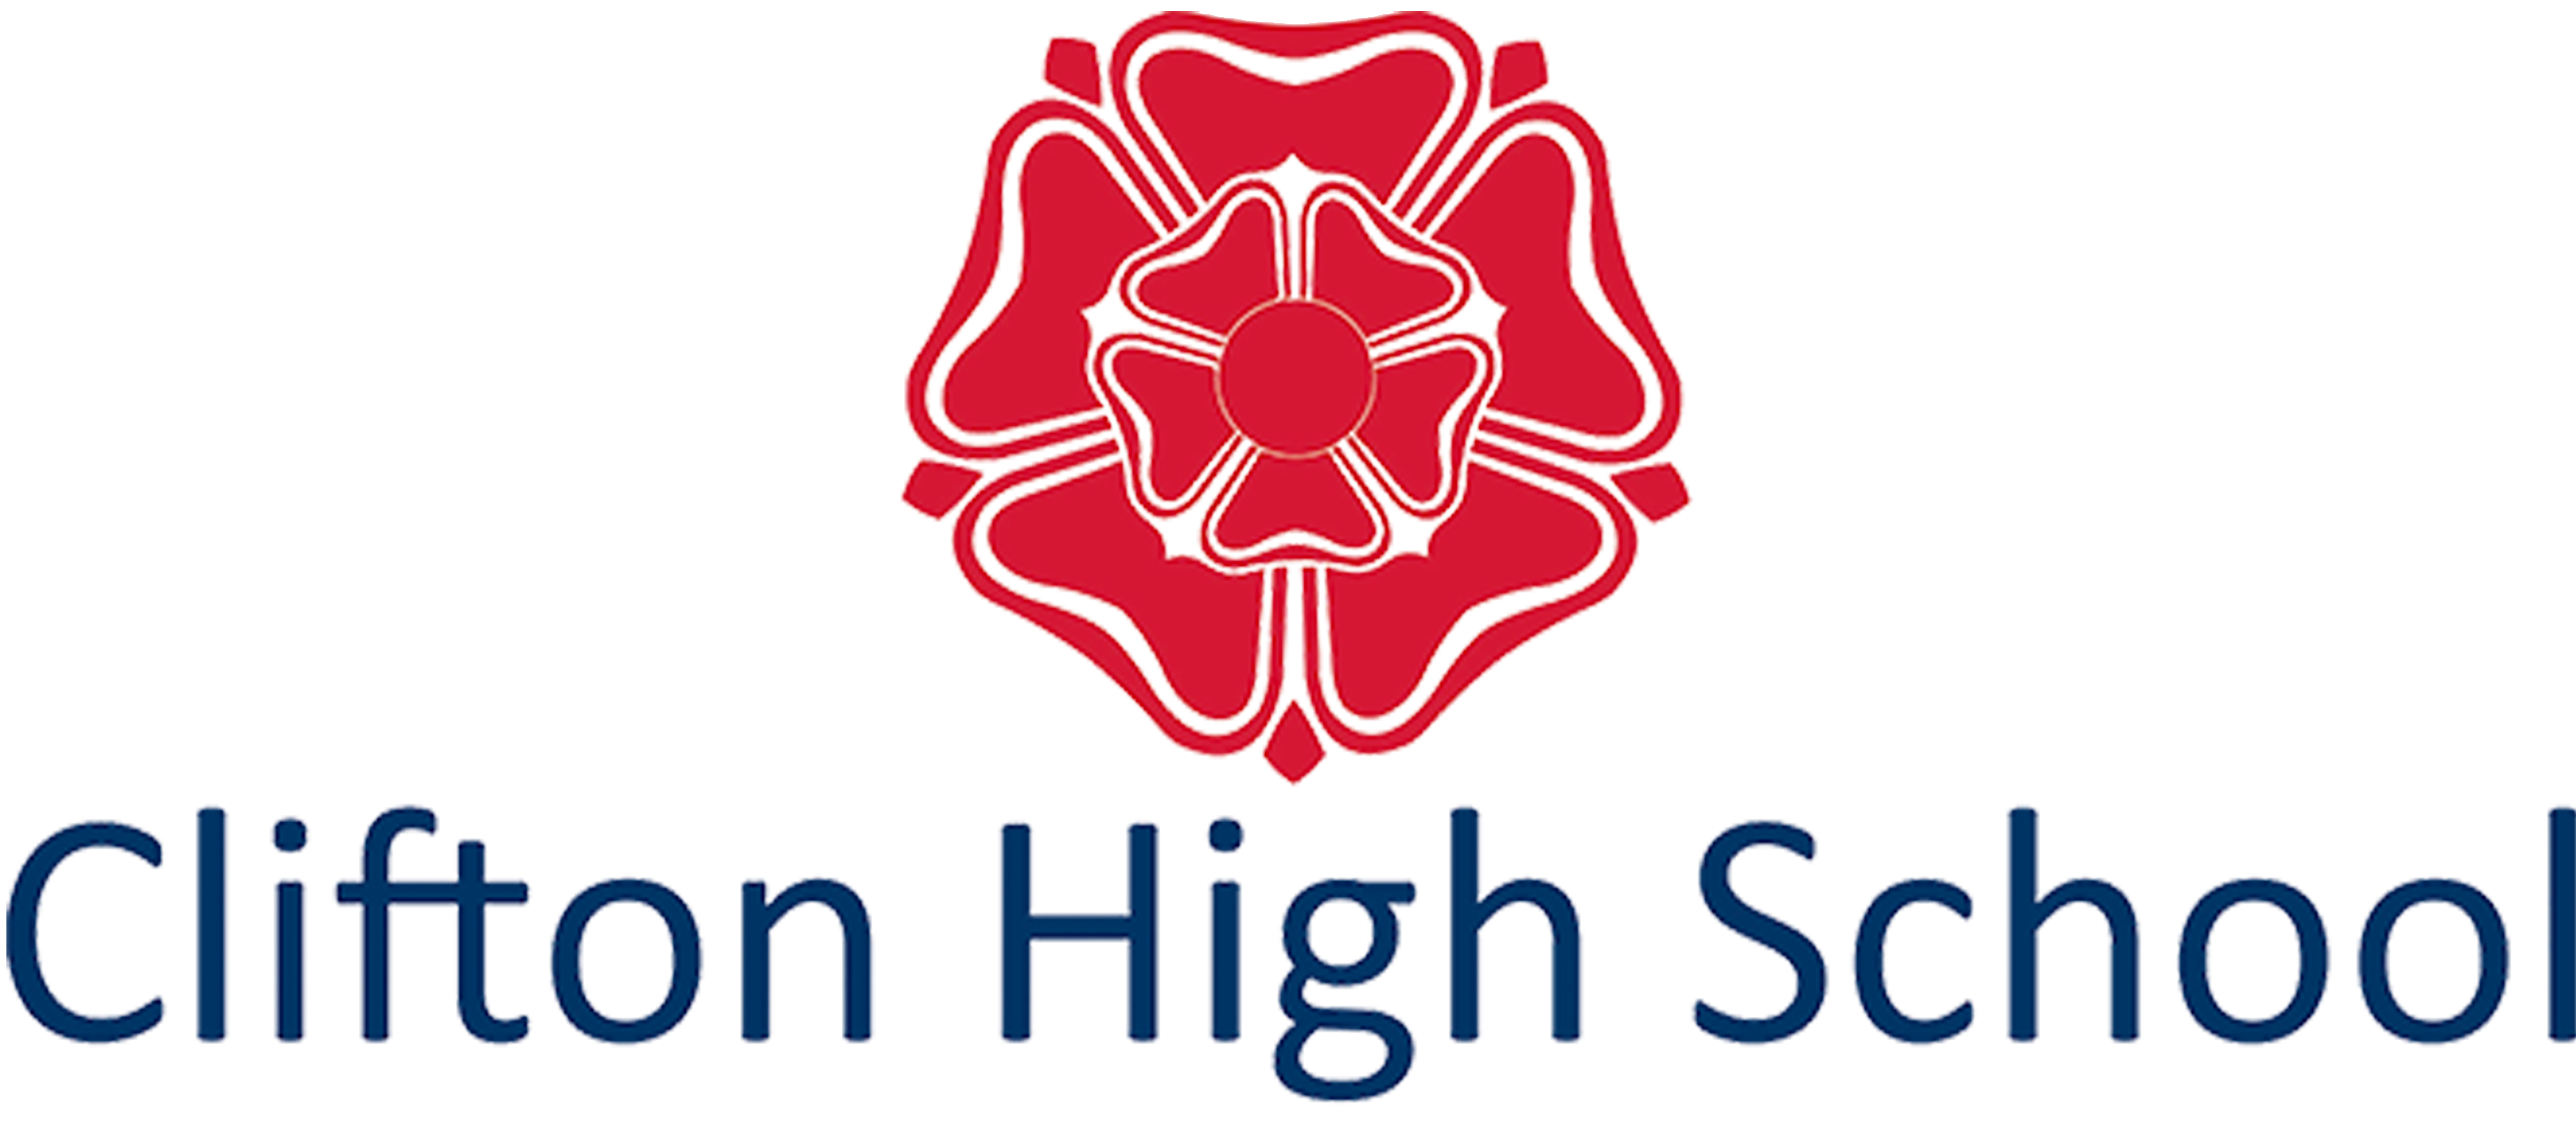 Red logo of school